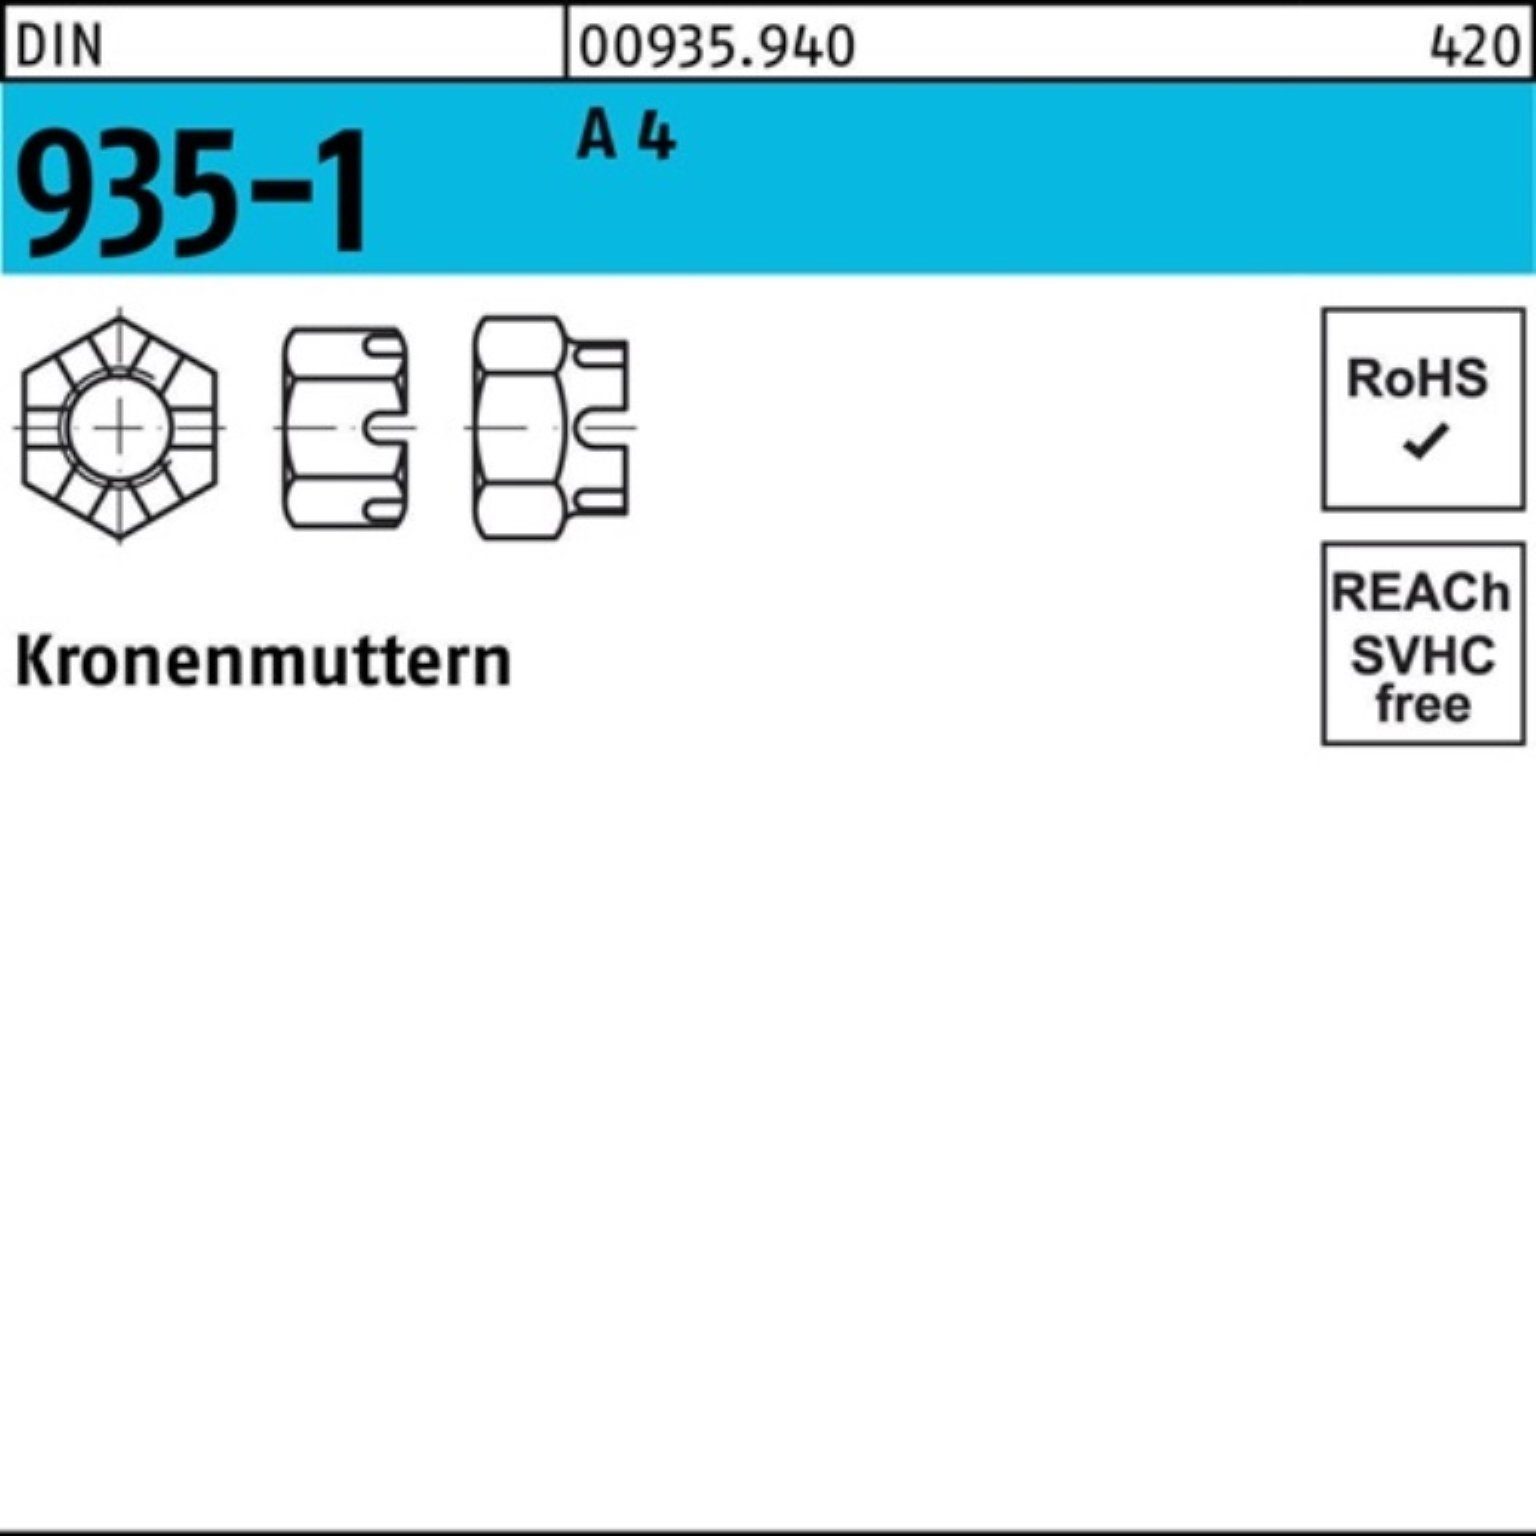 Reyher Kronenmutter 100er Kronenmutter 1 DIN 4 A Krone Pack Stück M16 A 4 935-1 DIN 935-1